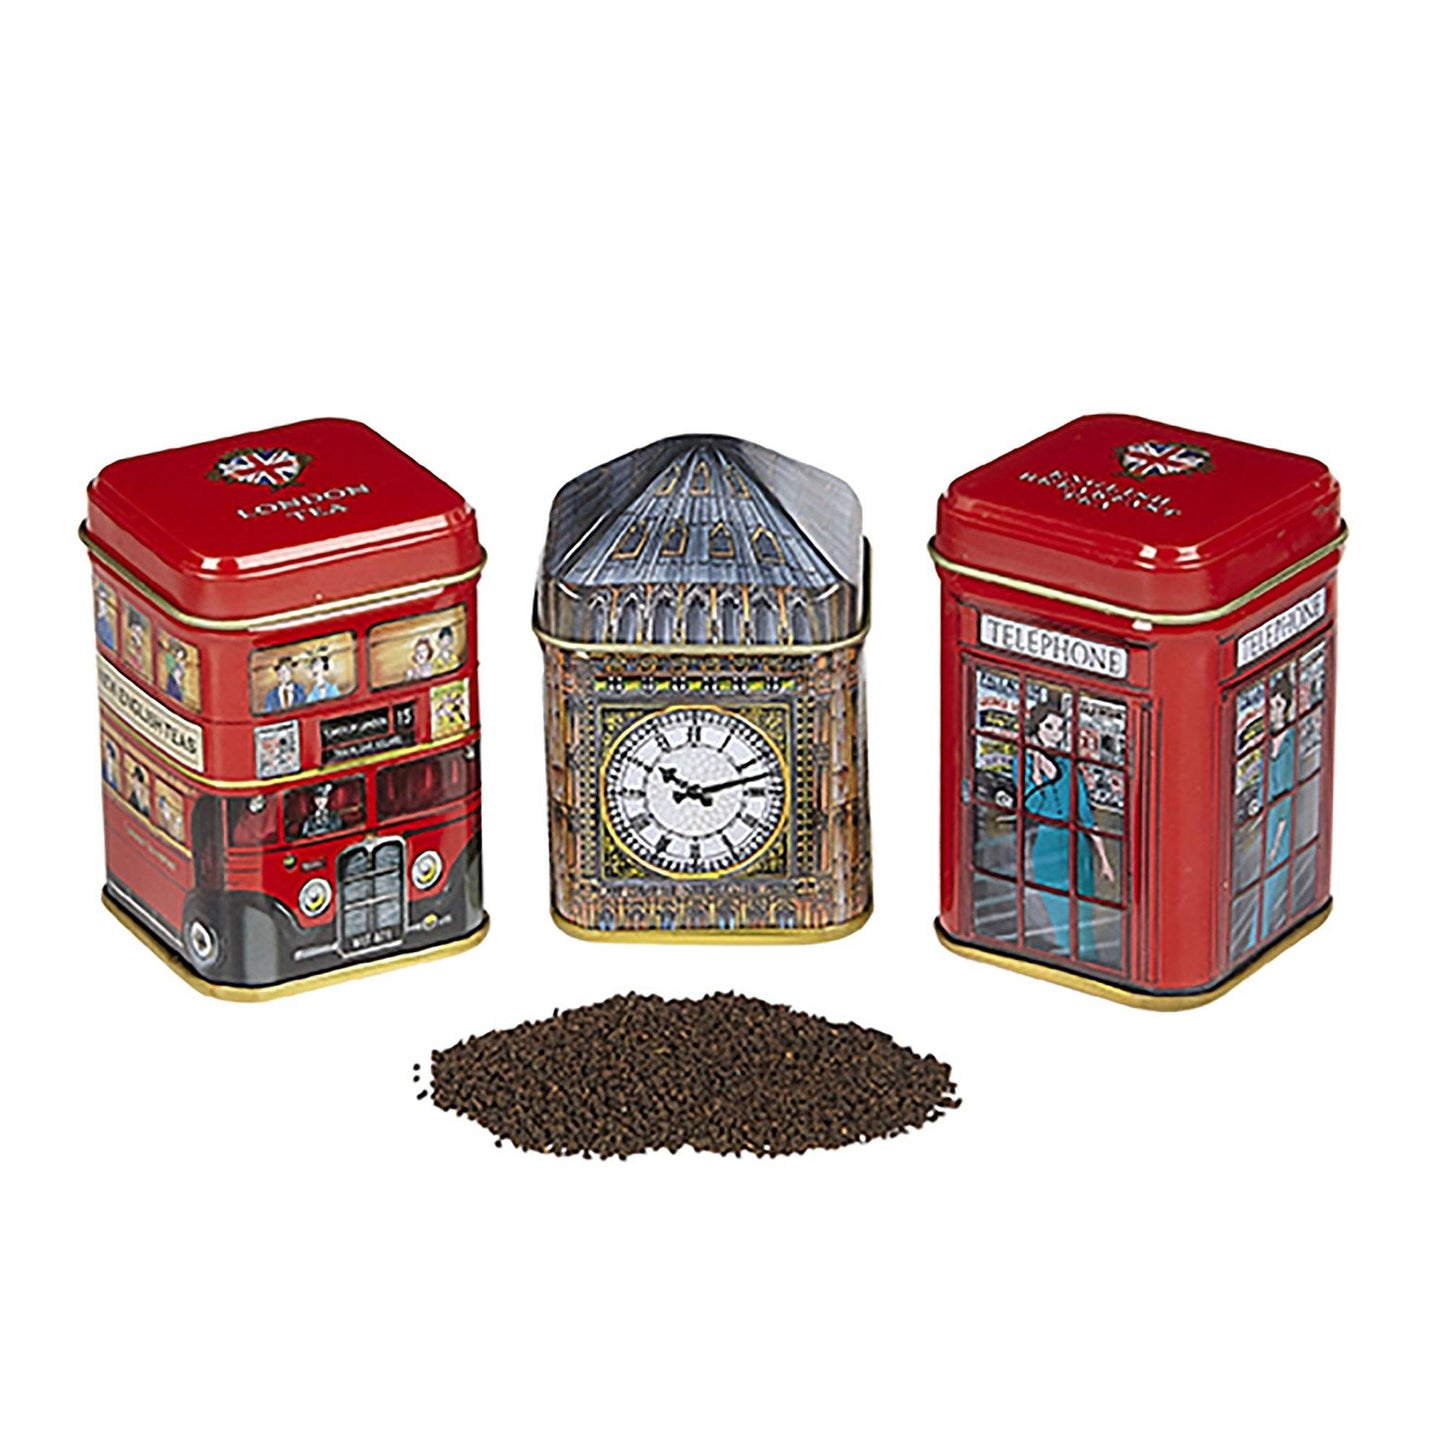 Traditions of London Triple Tea Selection Mini Tin Gift Pack Black Tea New English Teas 